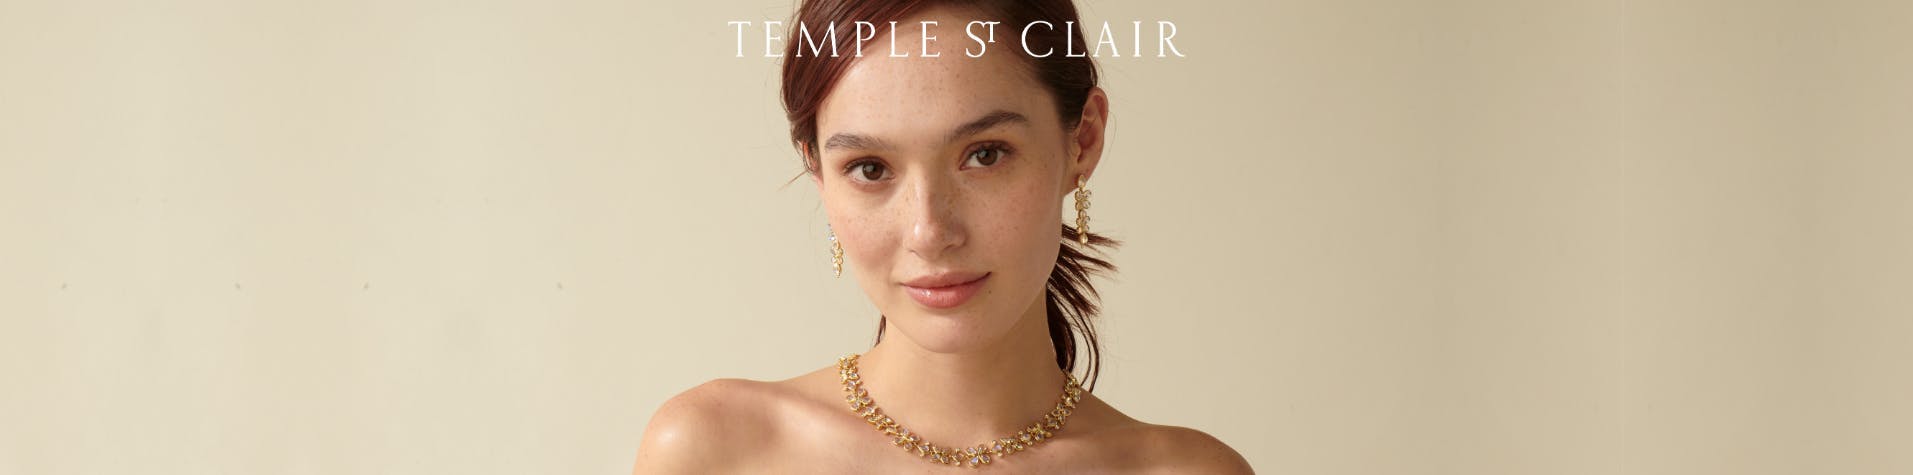 Designer Temple St Clair's luxury jewelry online at Eiseman Jewels Dallas, Texas